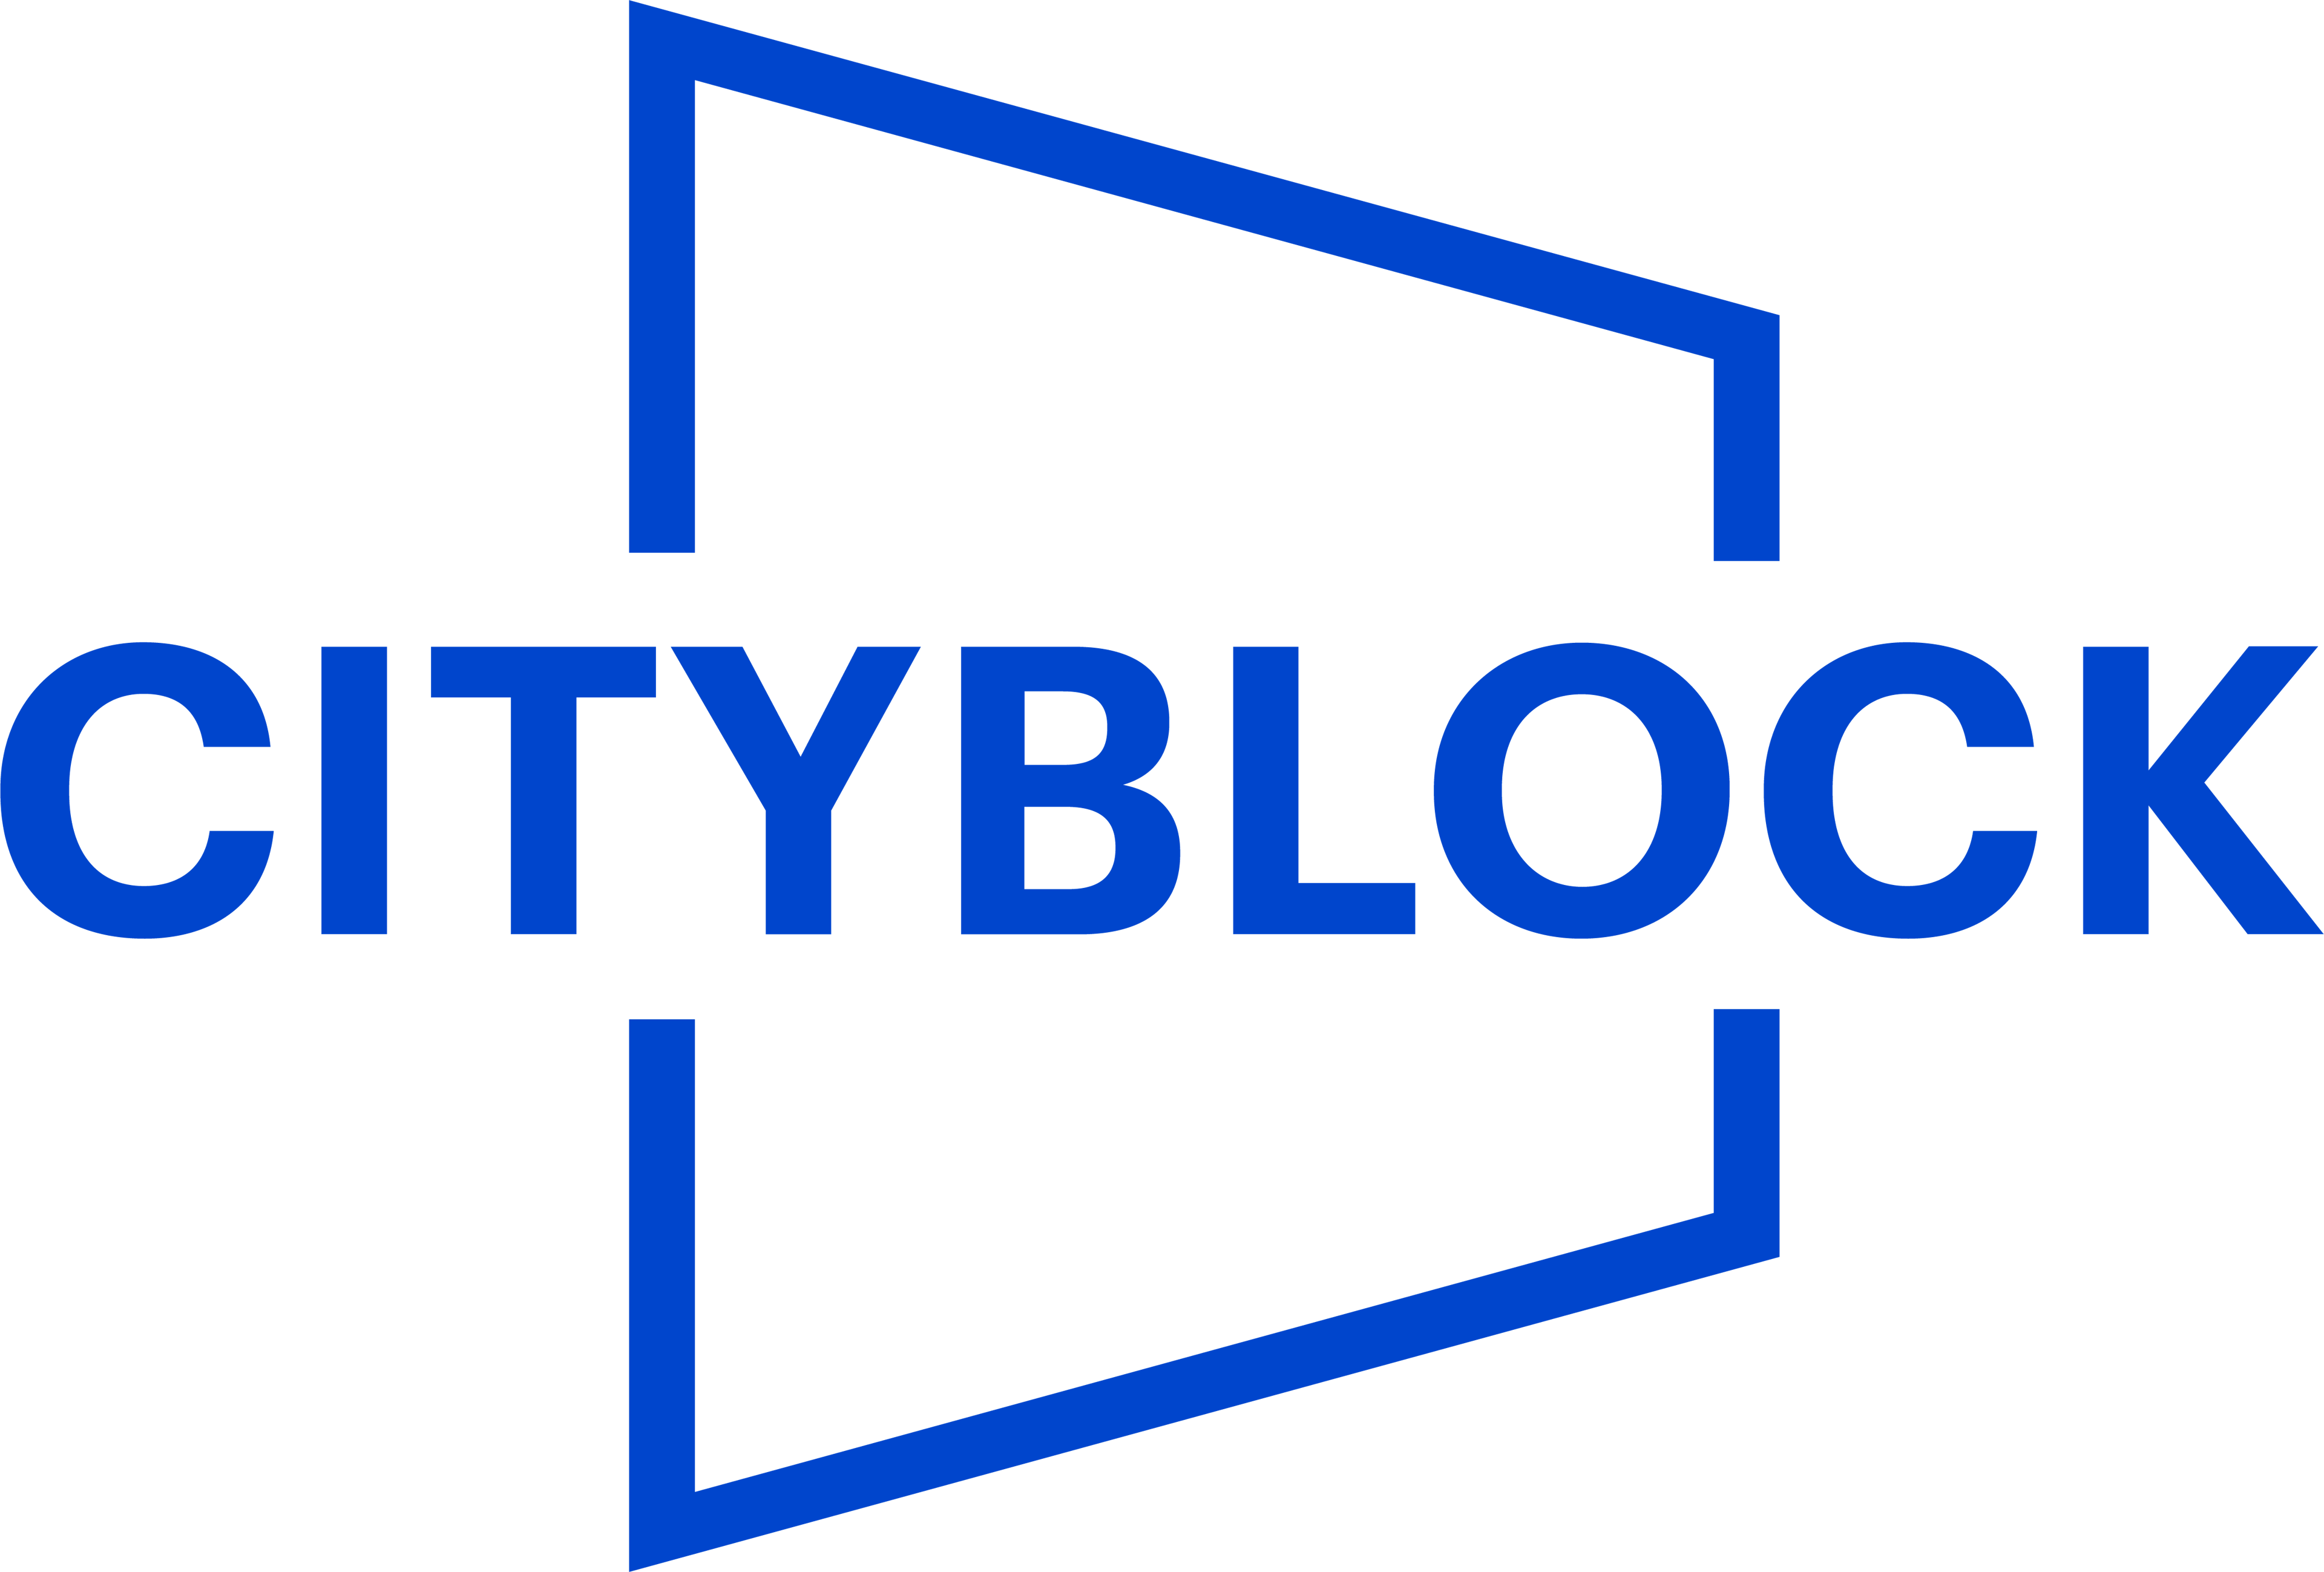 Vision Fund investment portfolio company Cityblock Health's logo